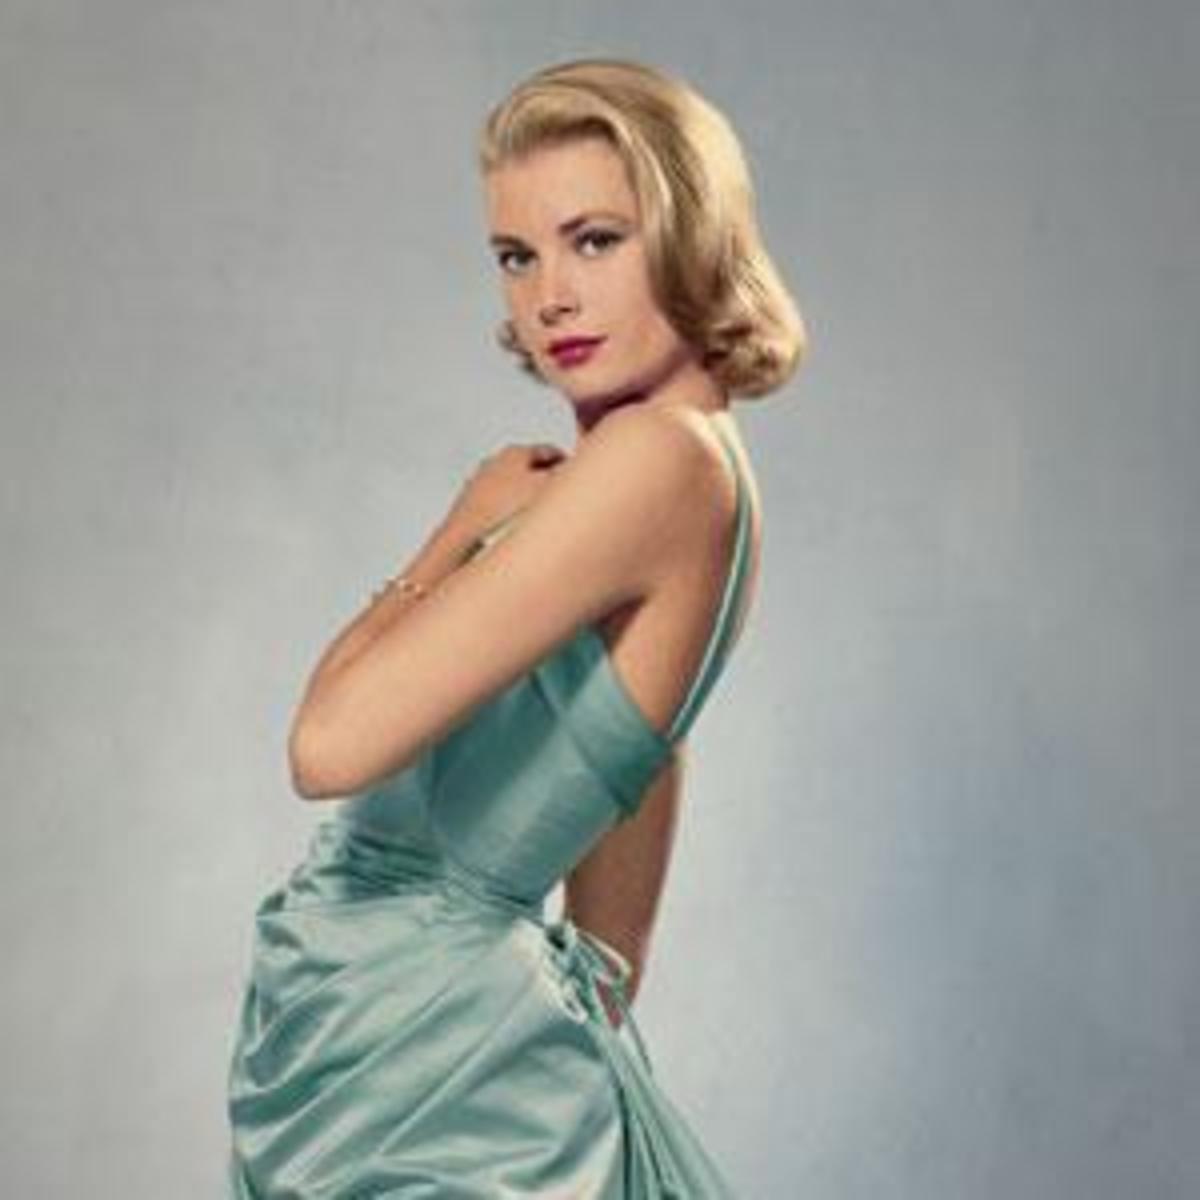 1950s-vintage-fashion-icon-grace-kelly